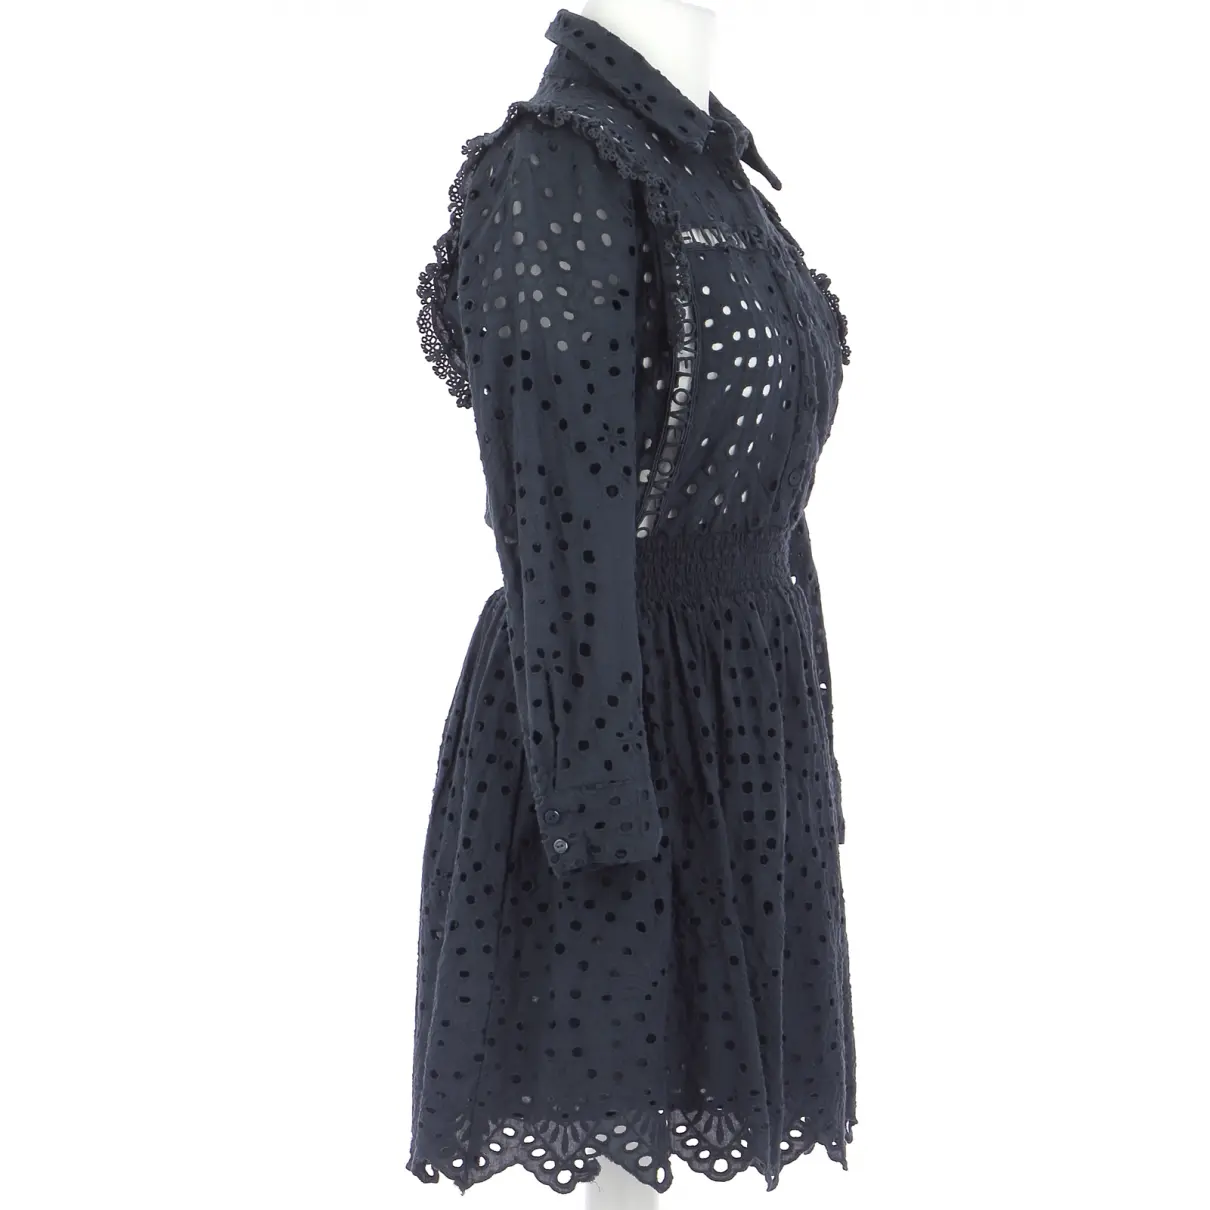 Buy Berenice Dress online